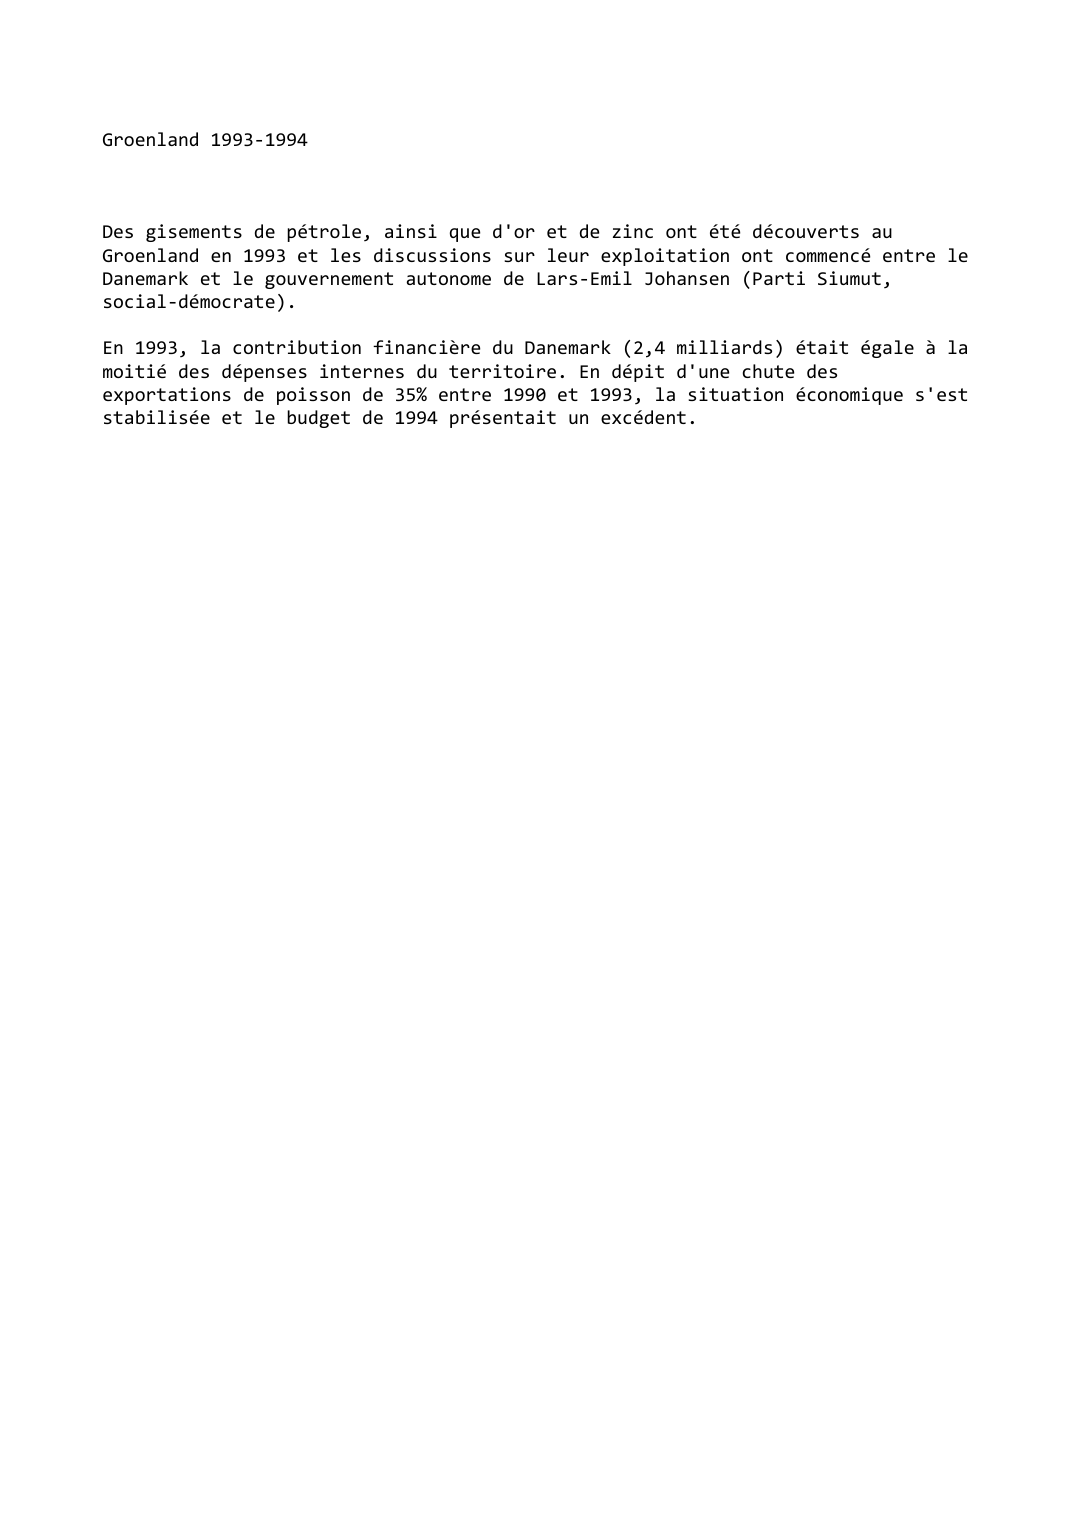 Prévisualisation du document Groenland (1993-1994)